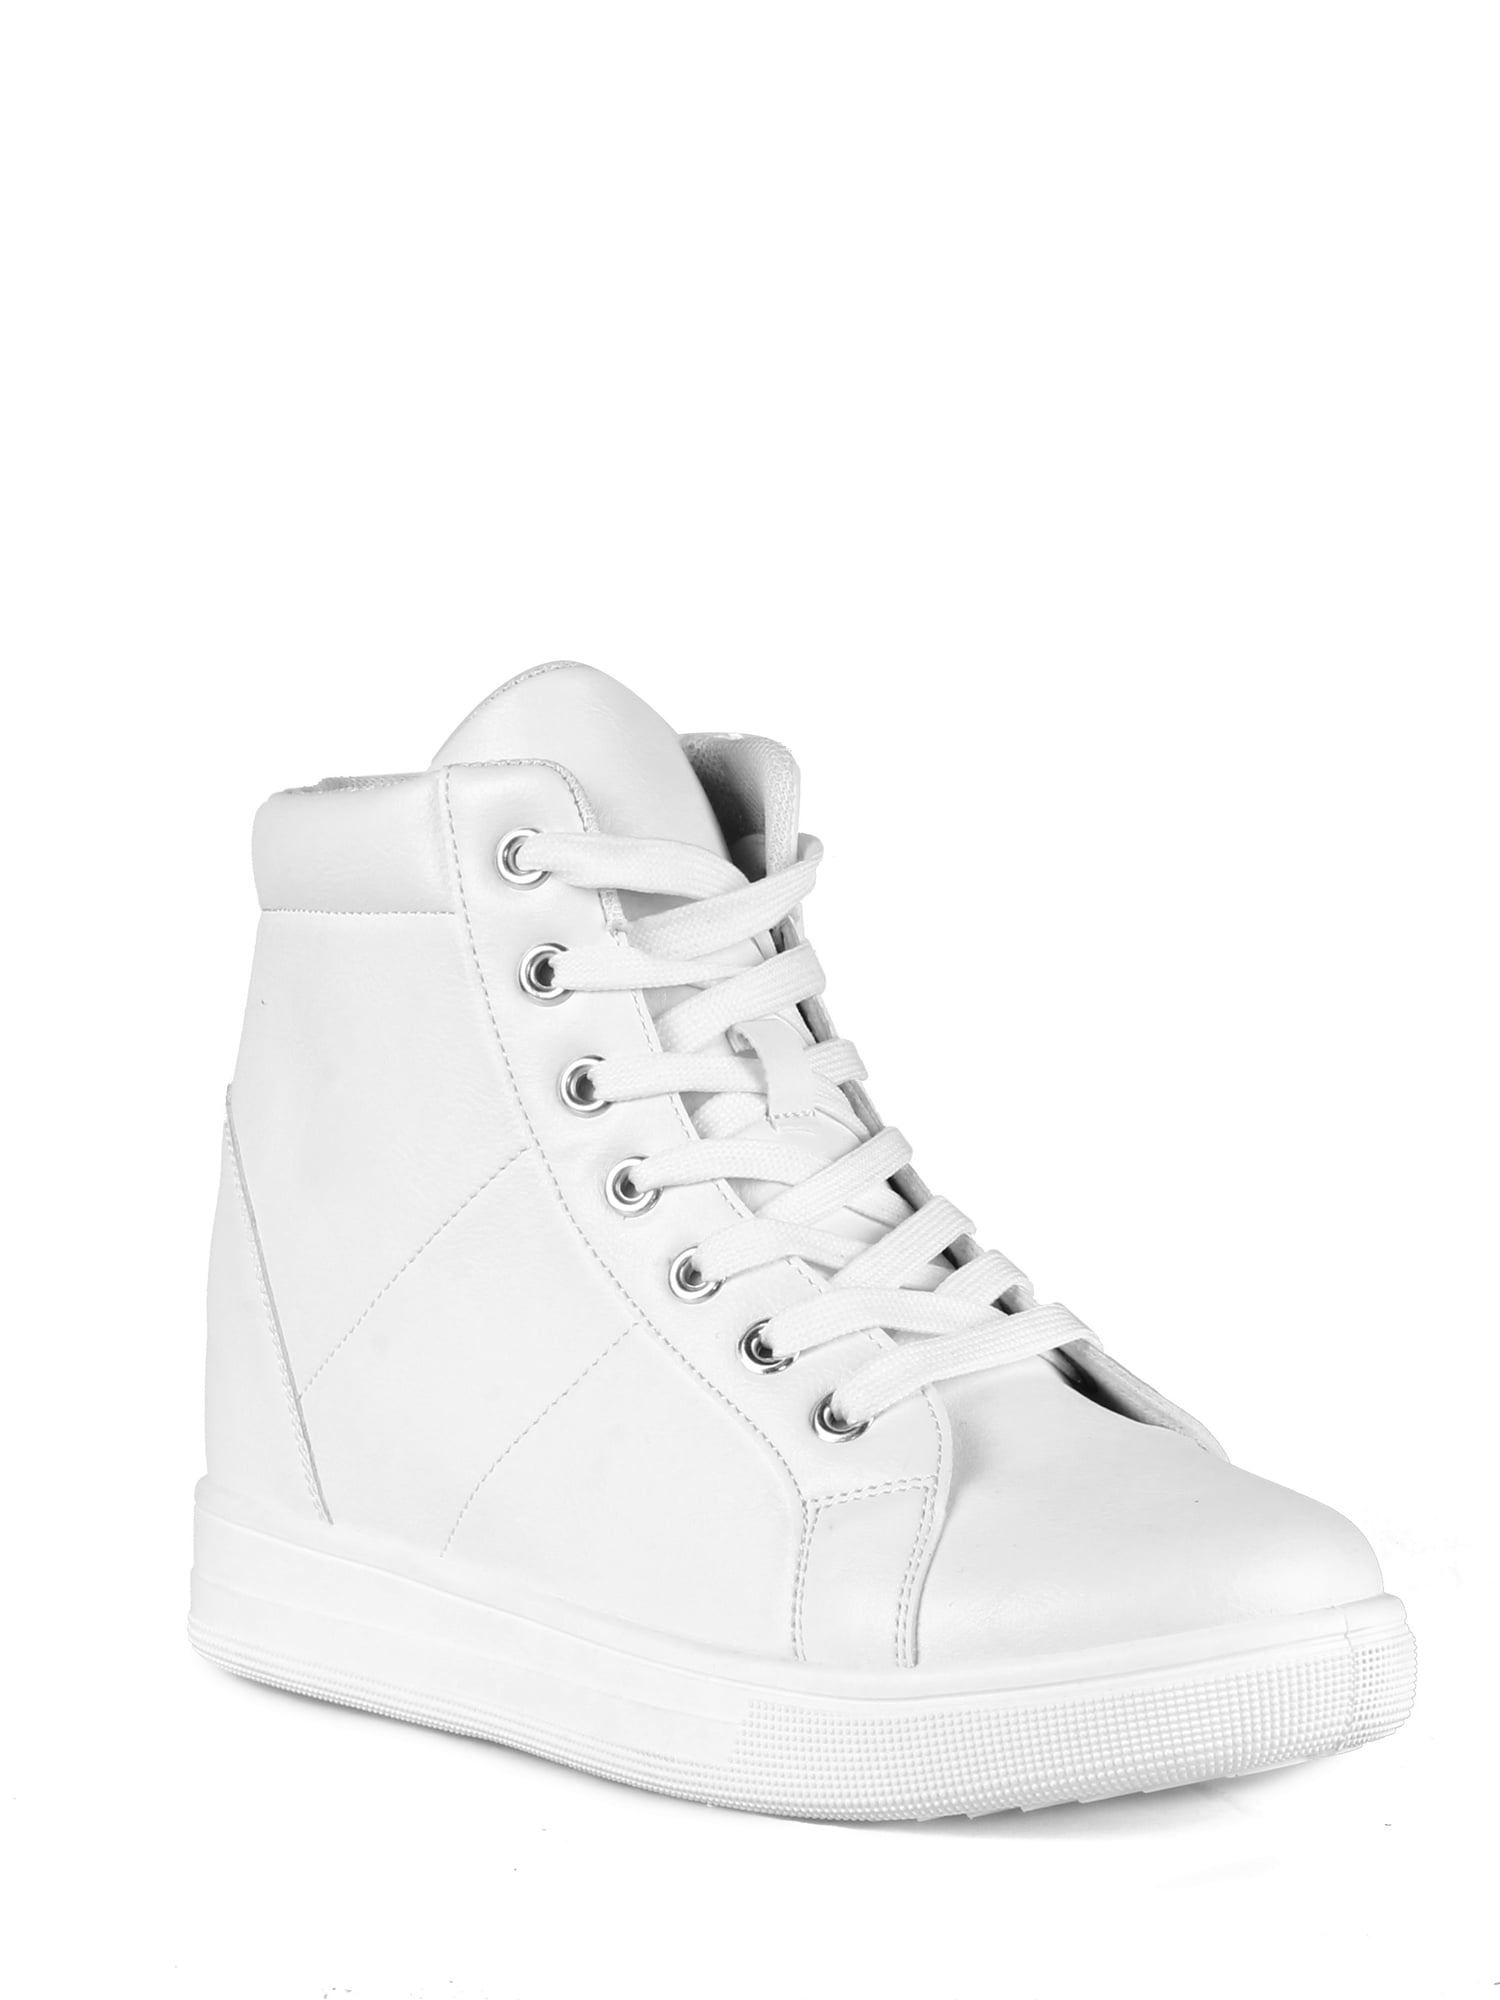 White Shoes - Walmart.com